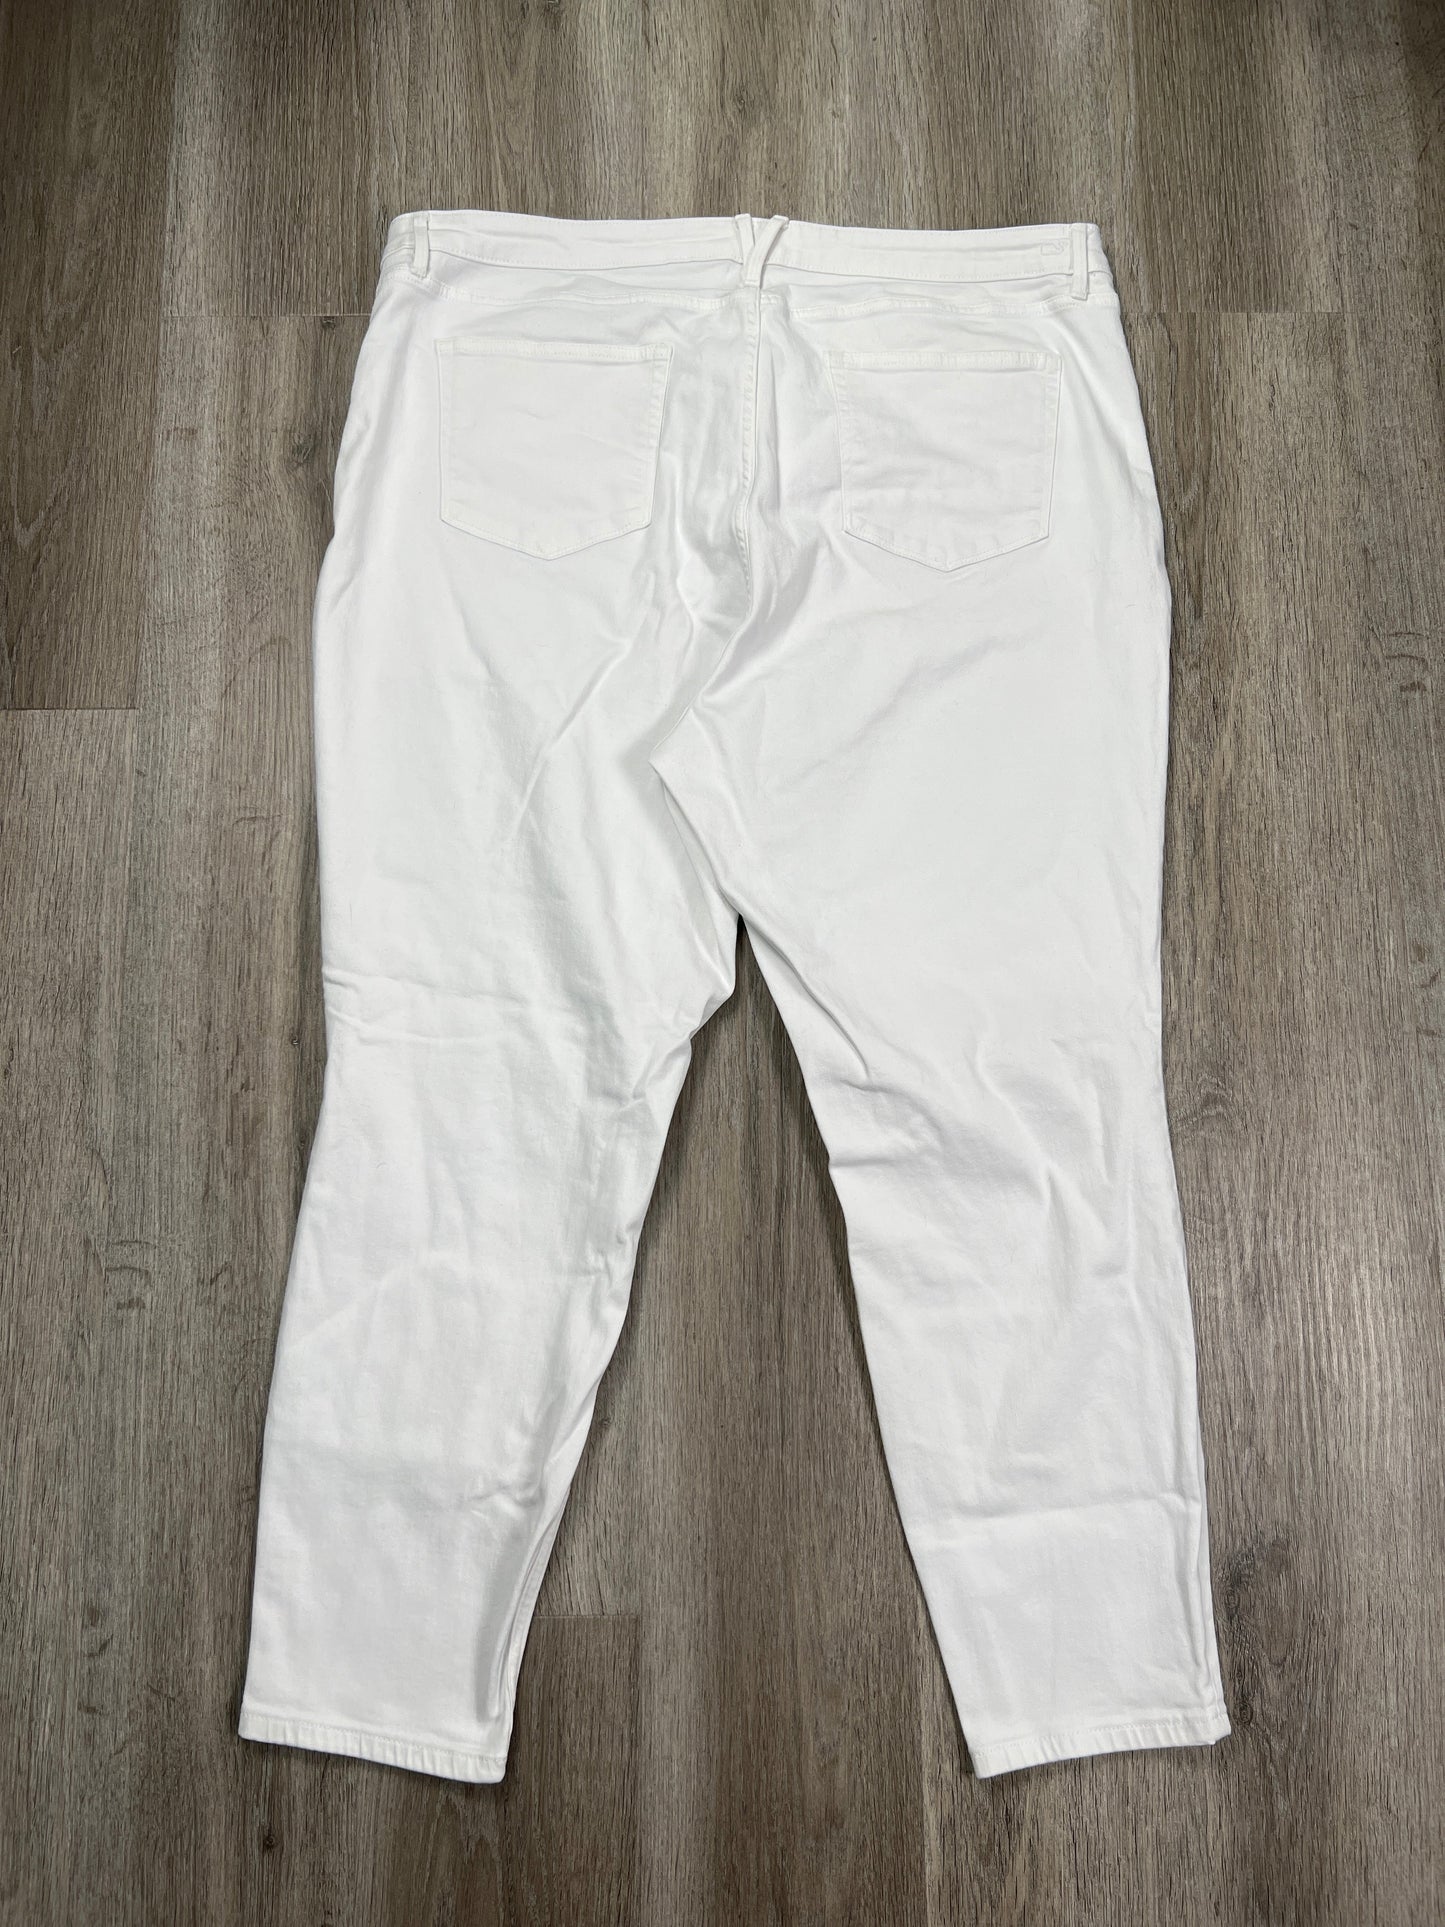 White Jeans Skinny Vineyard Vines, Size 24